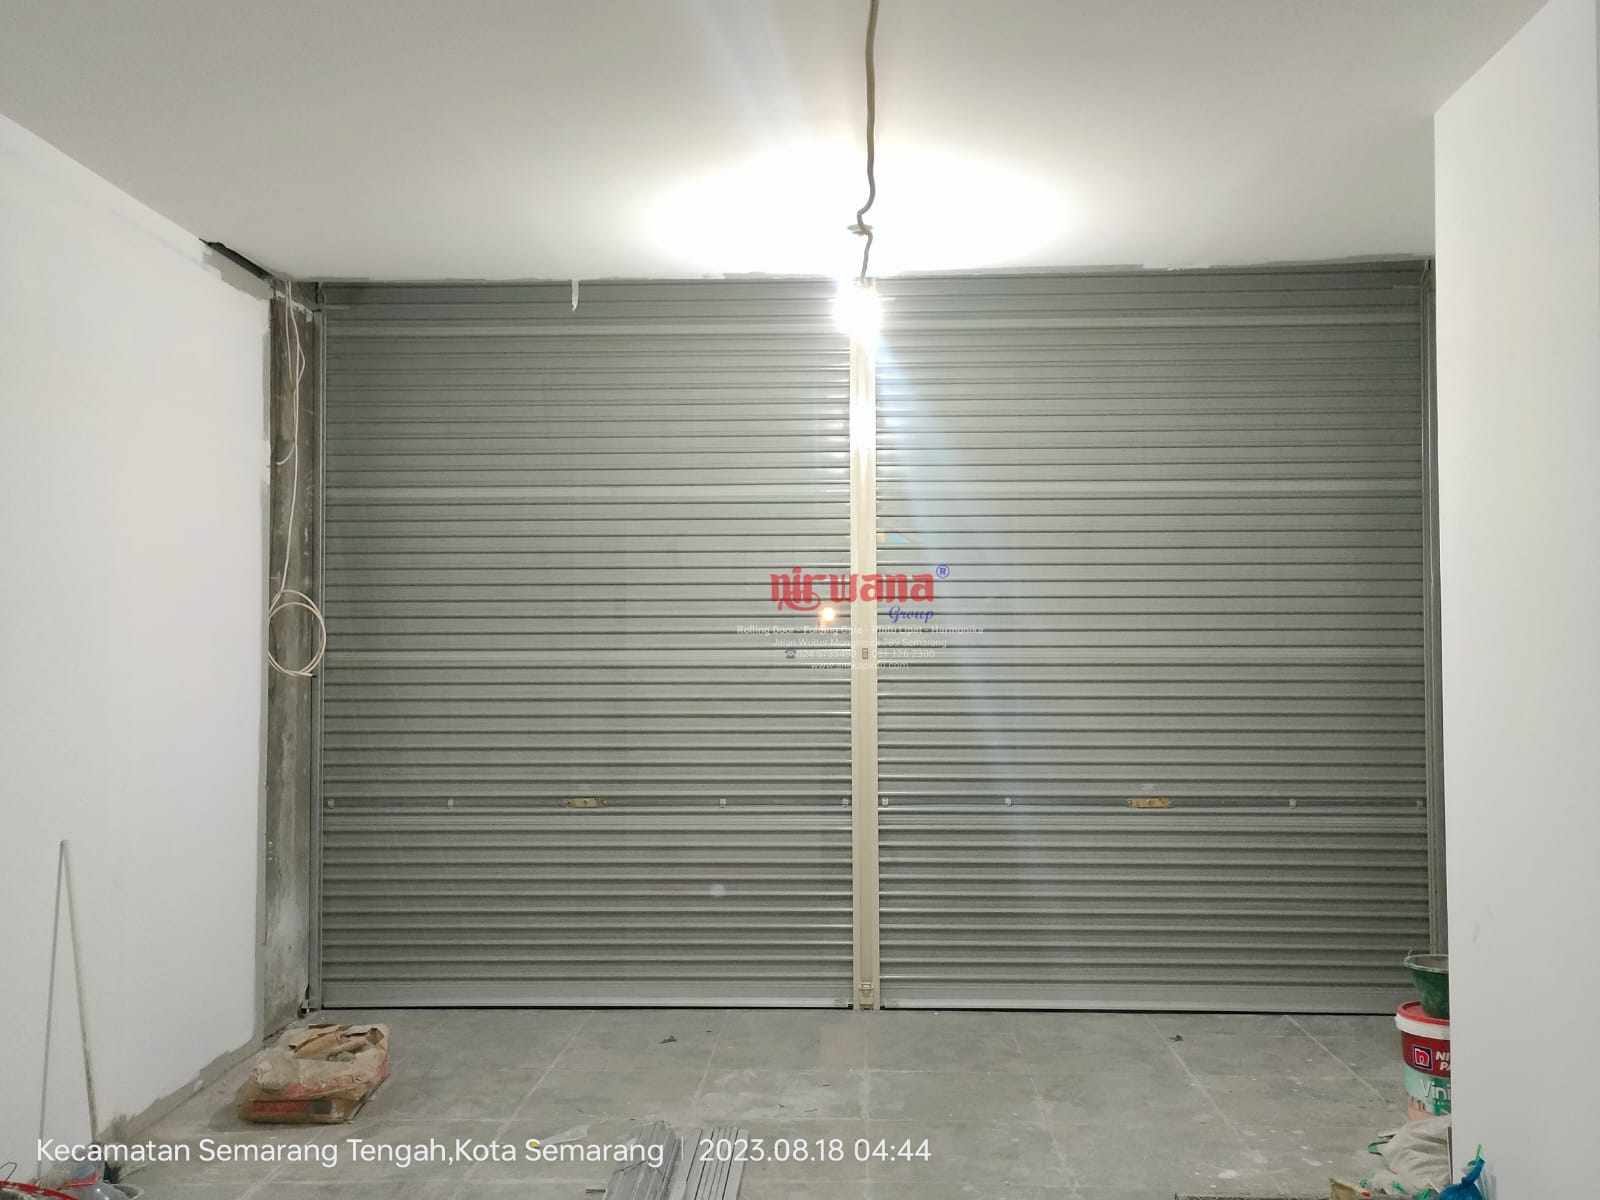 Pemasangan Rolling Door One Sheet Full Perforated di Tenant M231 Paragon Mall Semarang